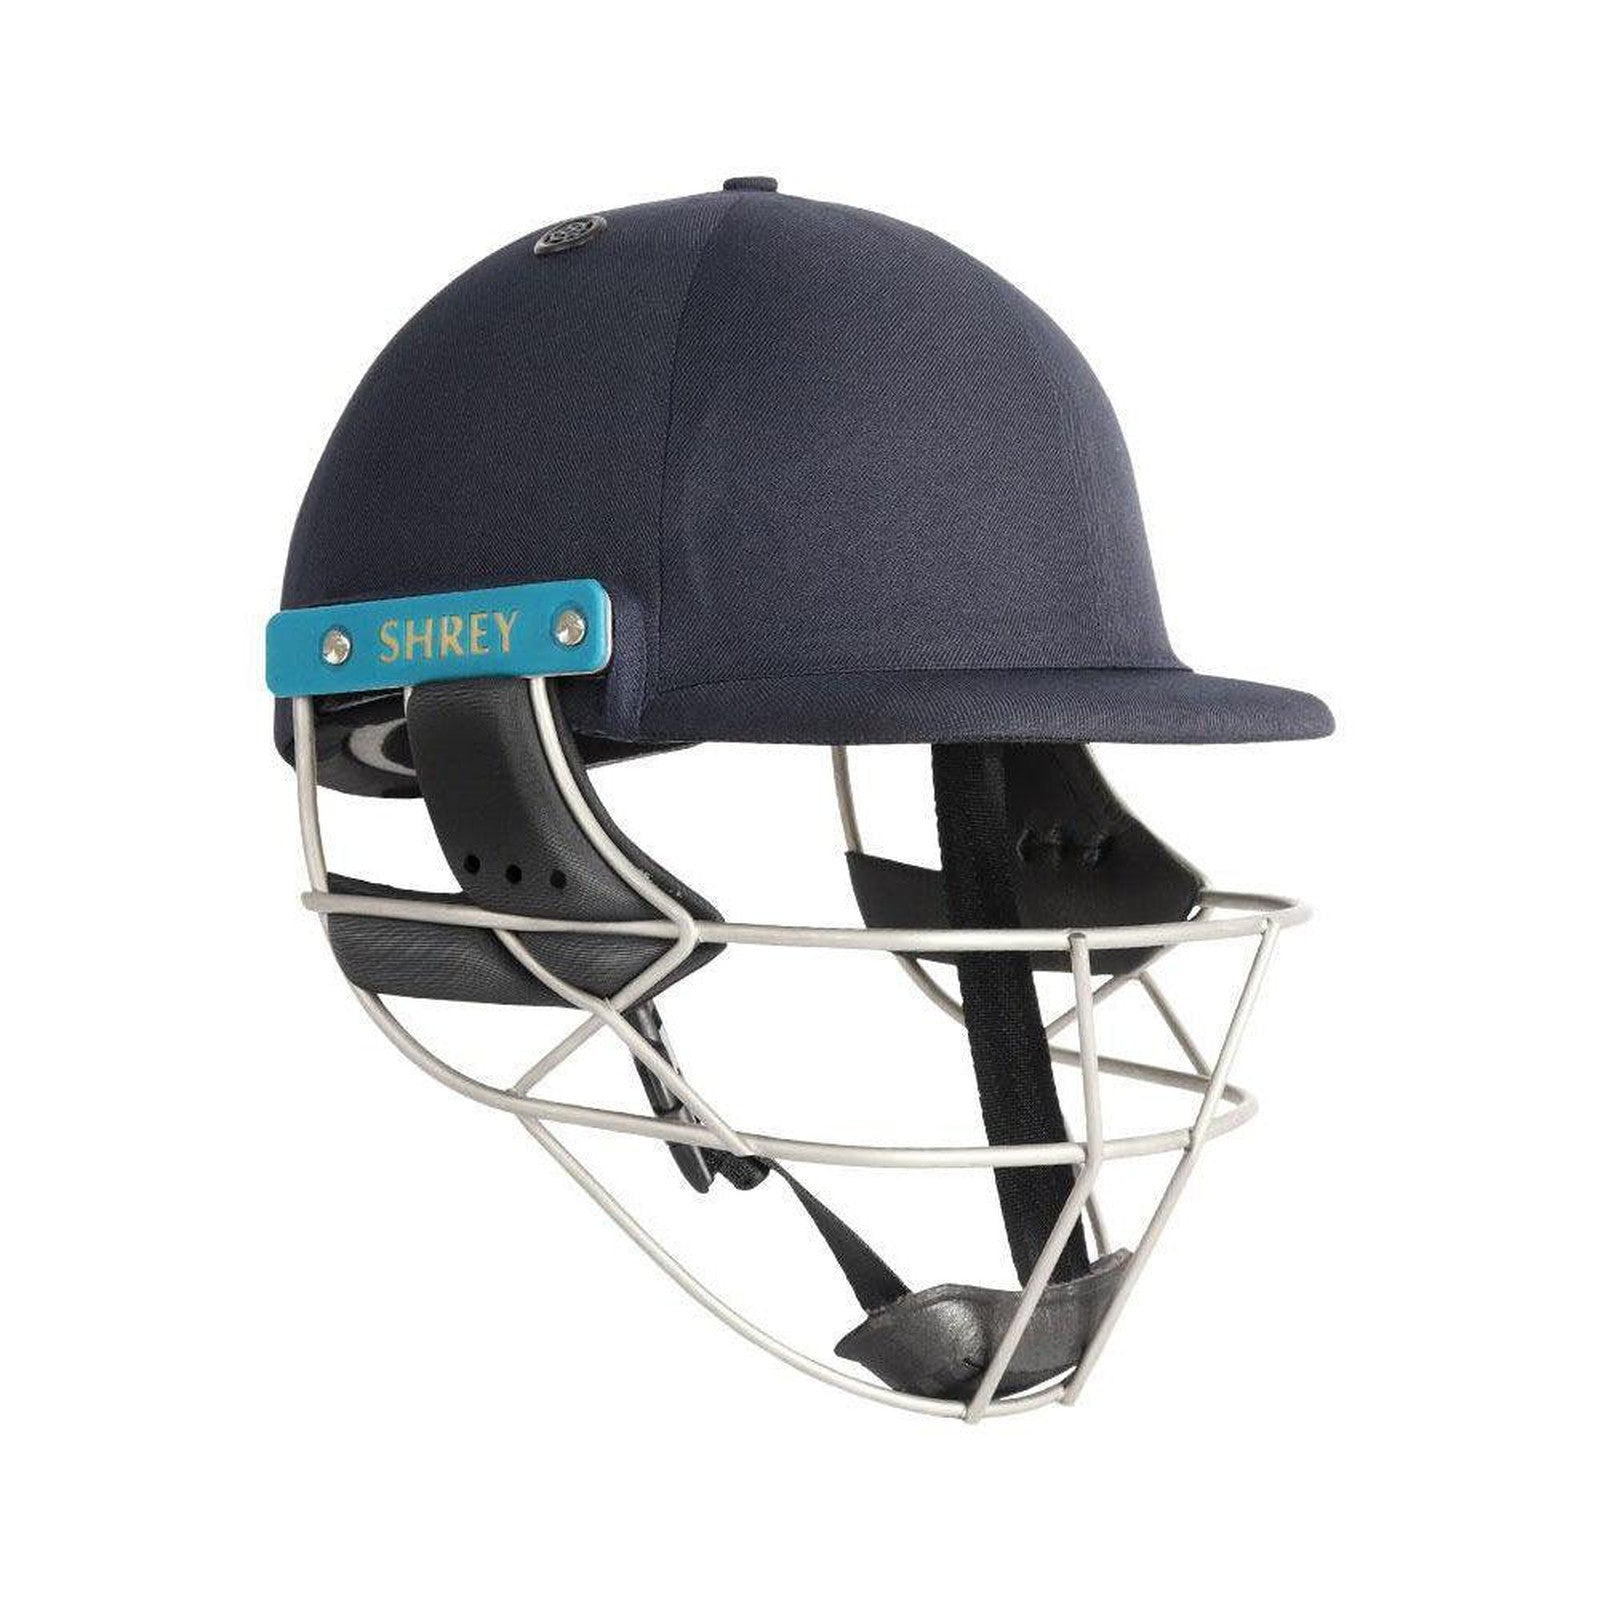 Shrey Master Class Air 2.0 Cricket Helmet With Stainless Steel Visor - Navy